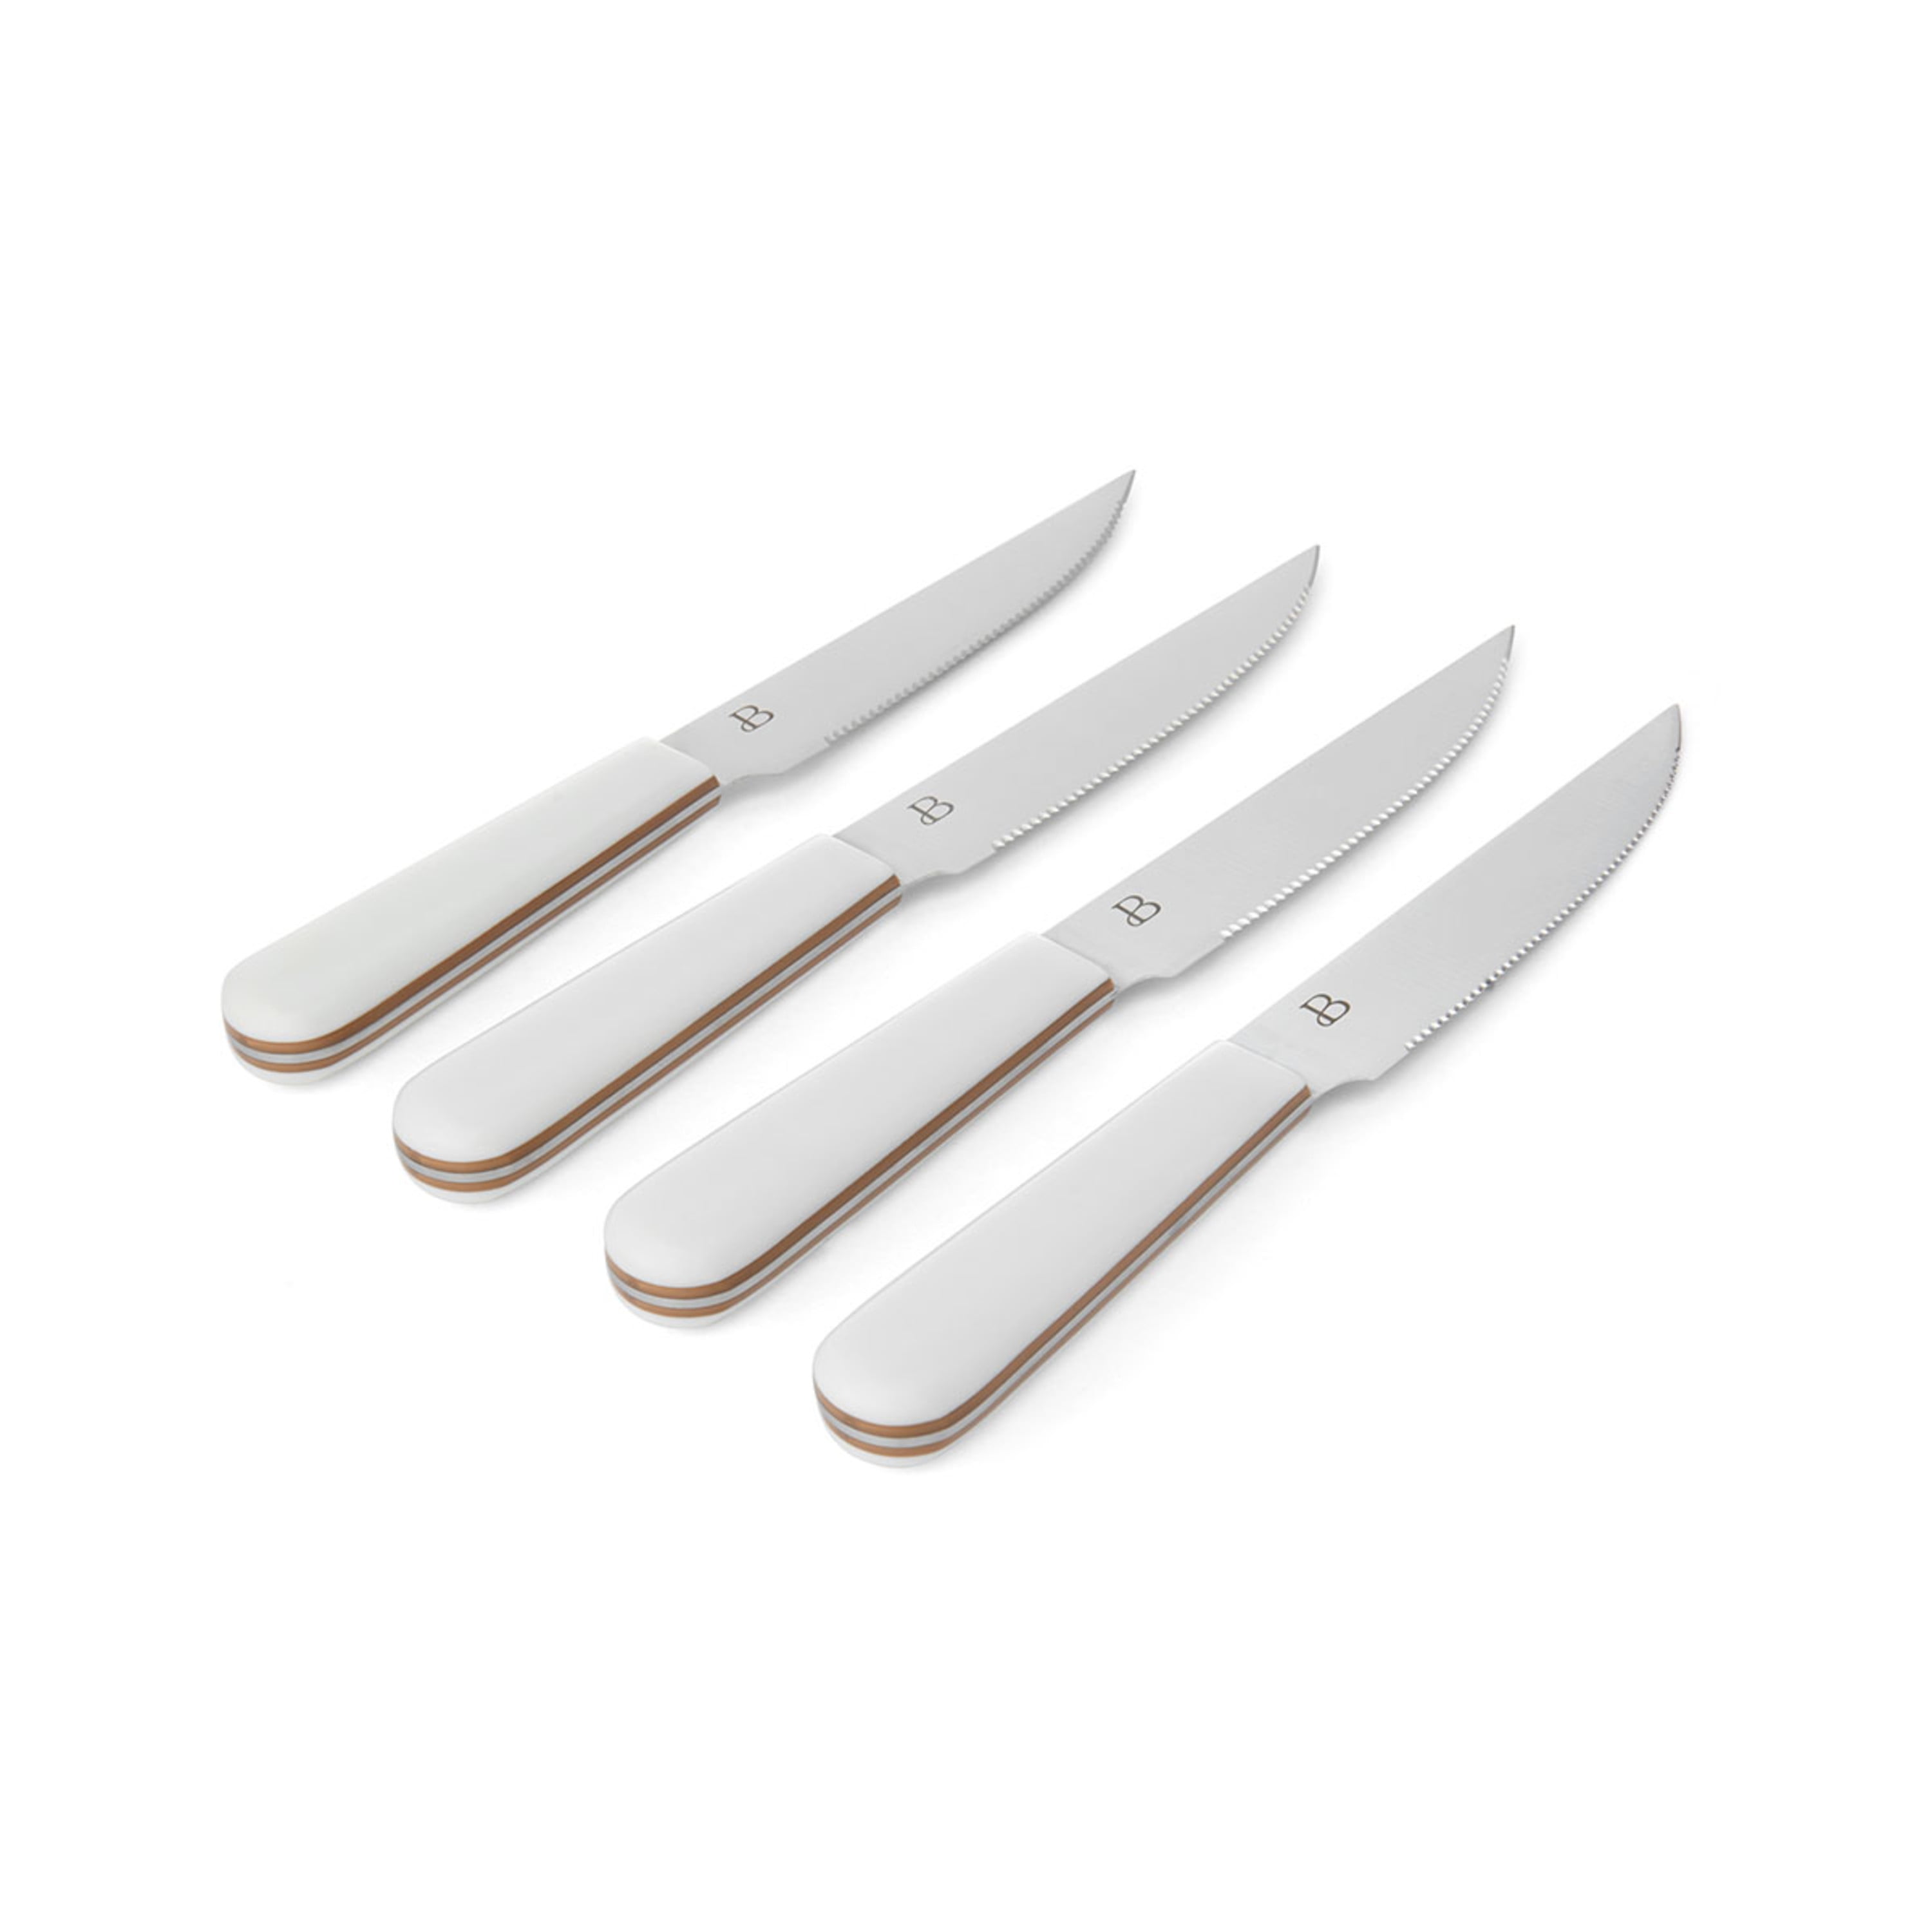 Wüsthof Classic 4-Piece White Steak Knife Set